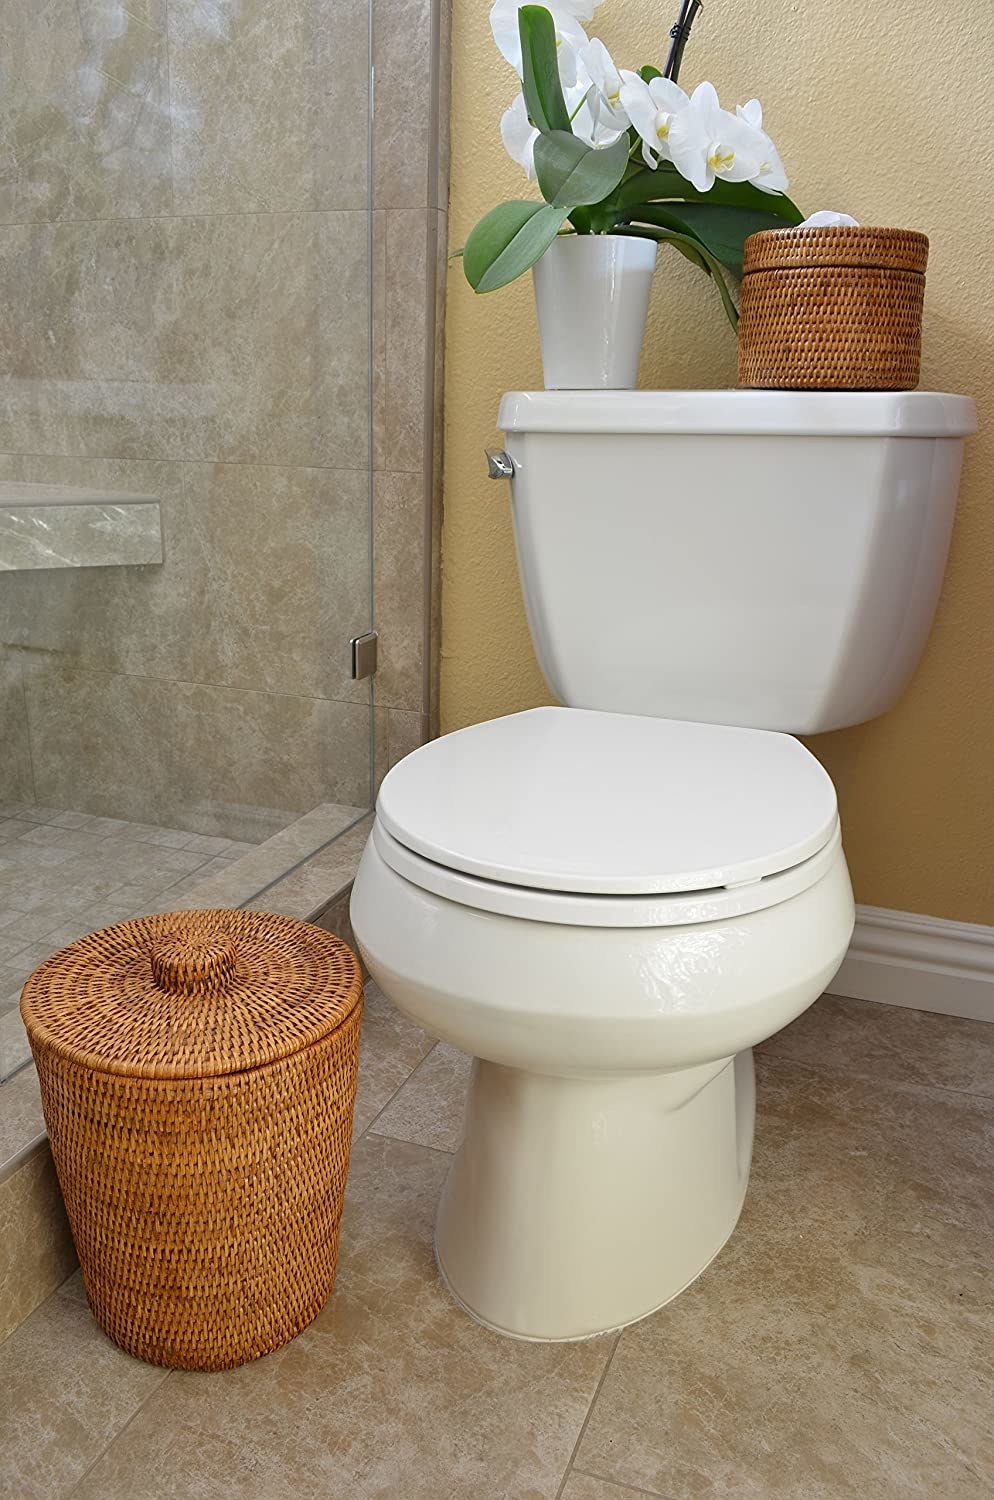 the kouboo la jolla rattan round waste basket next to a toilet in a bathroom